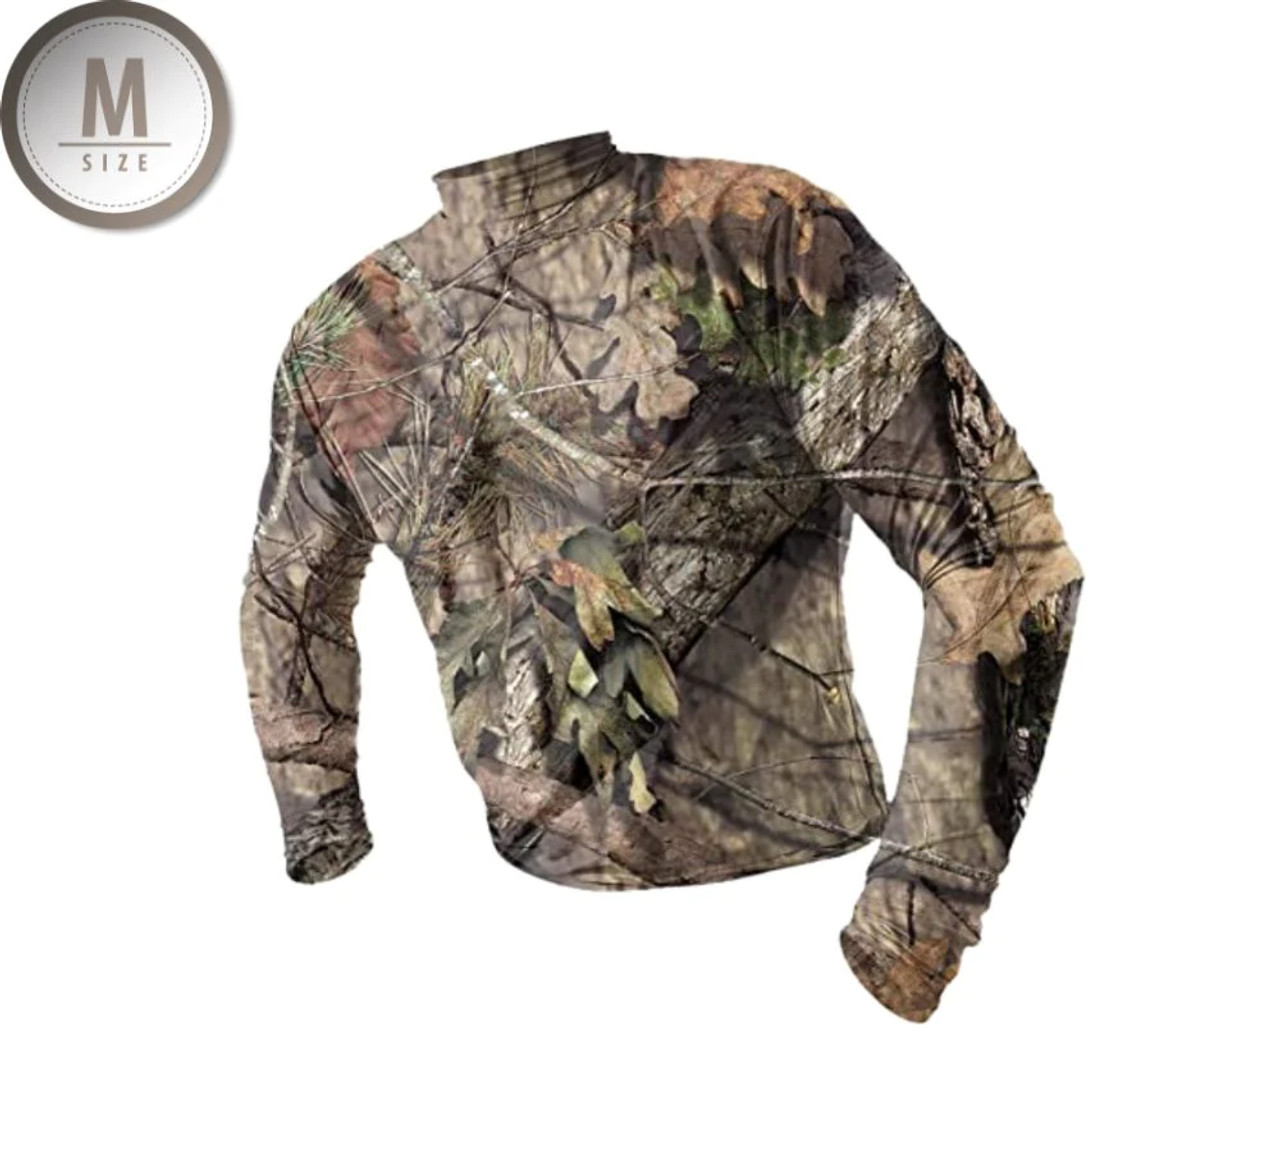 Rynoskin Long Sleeve Shirt with UV Layer & Bite Protection, Medium, Mossy Oak Country